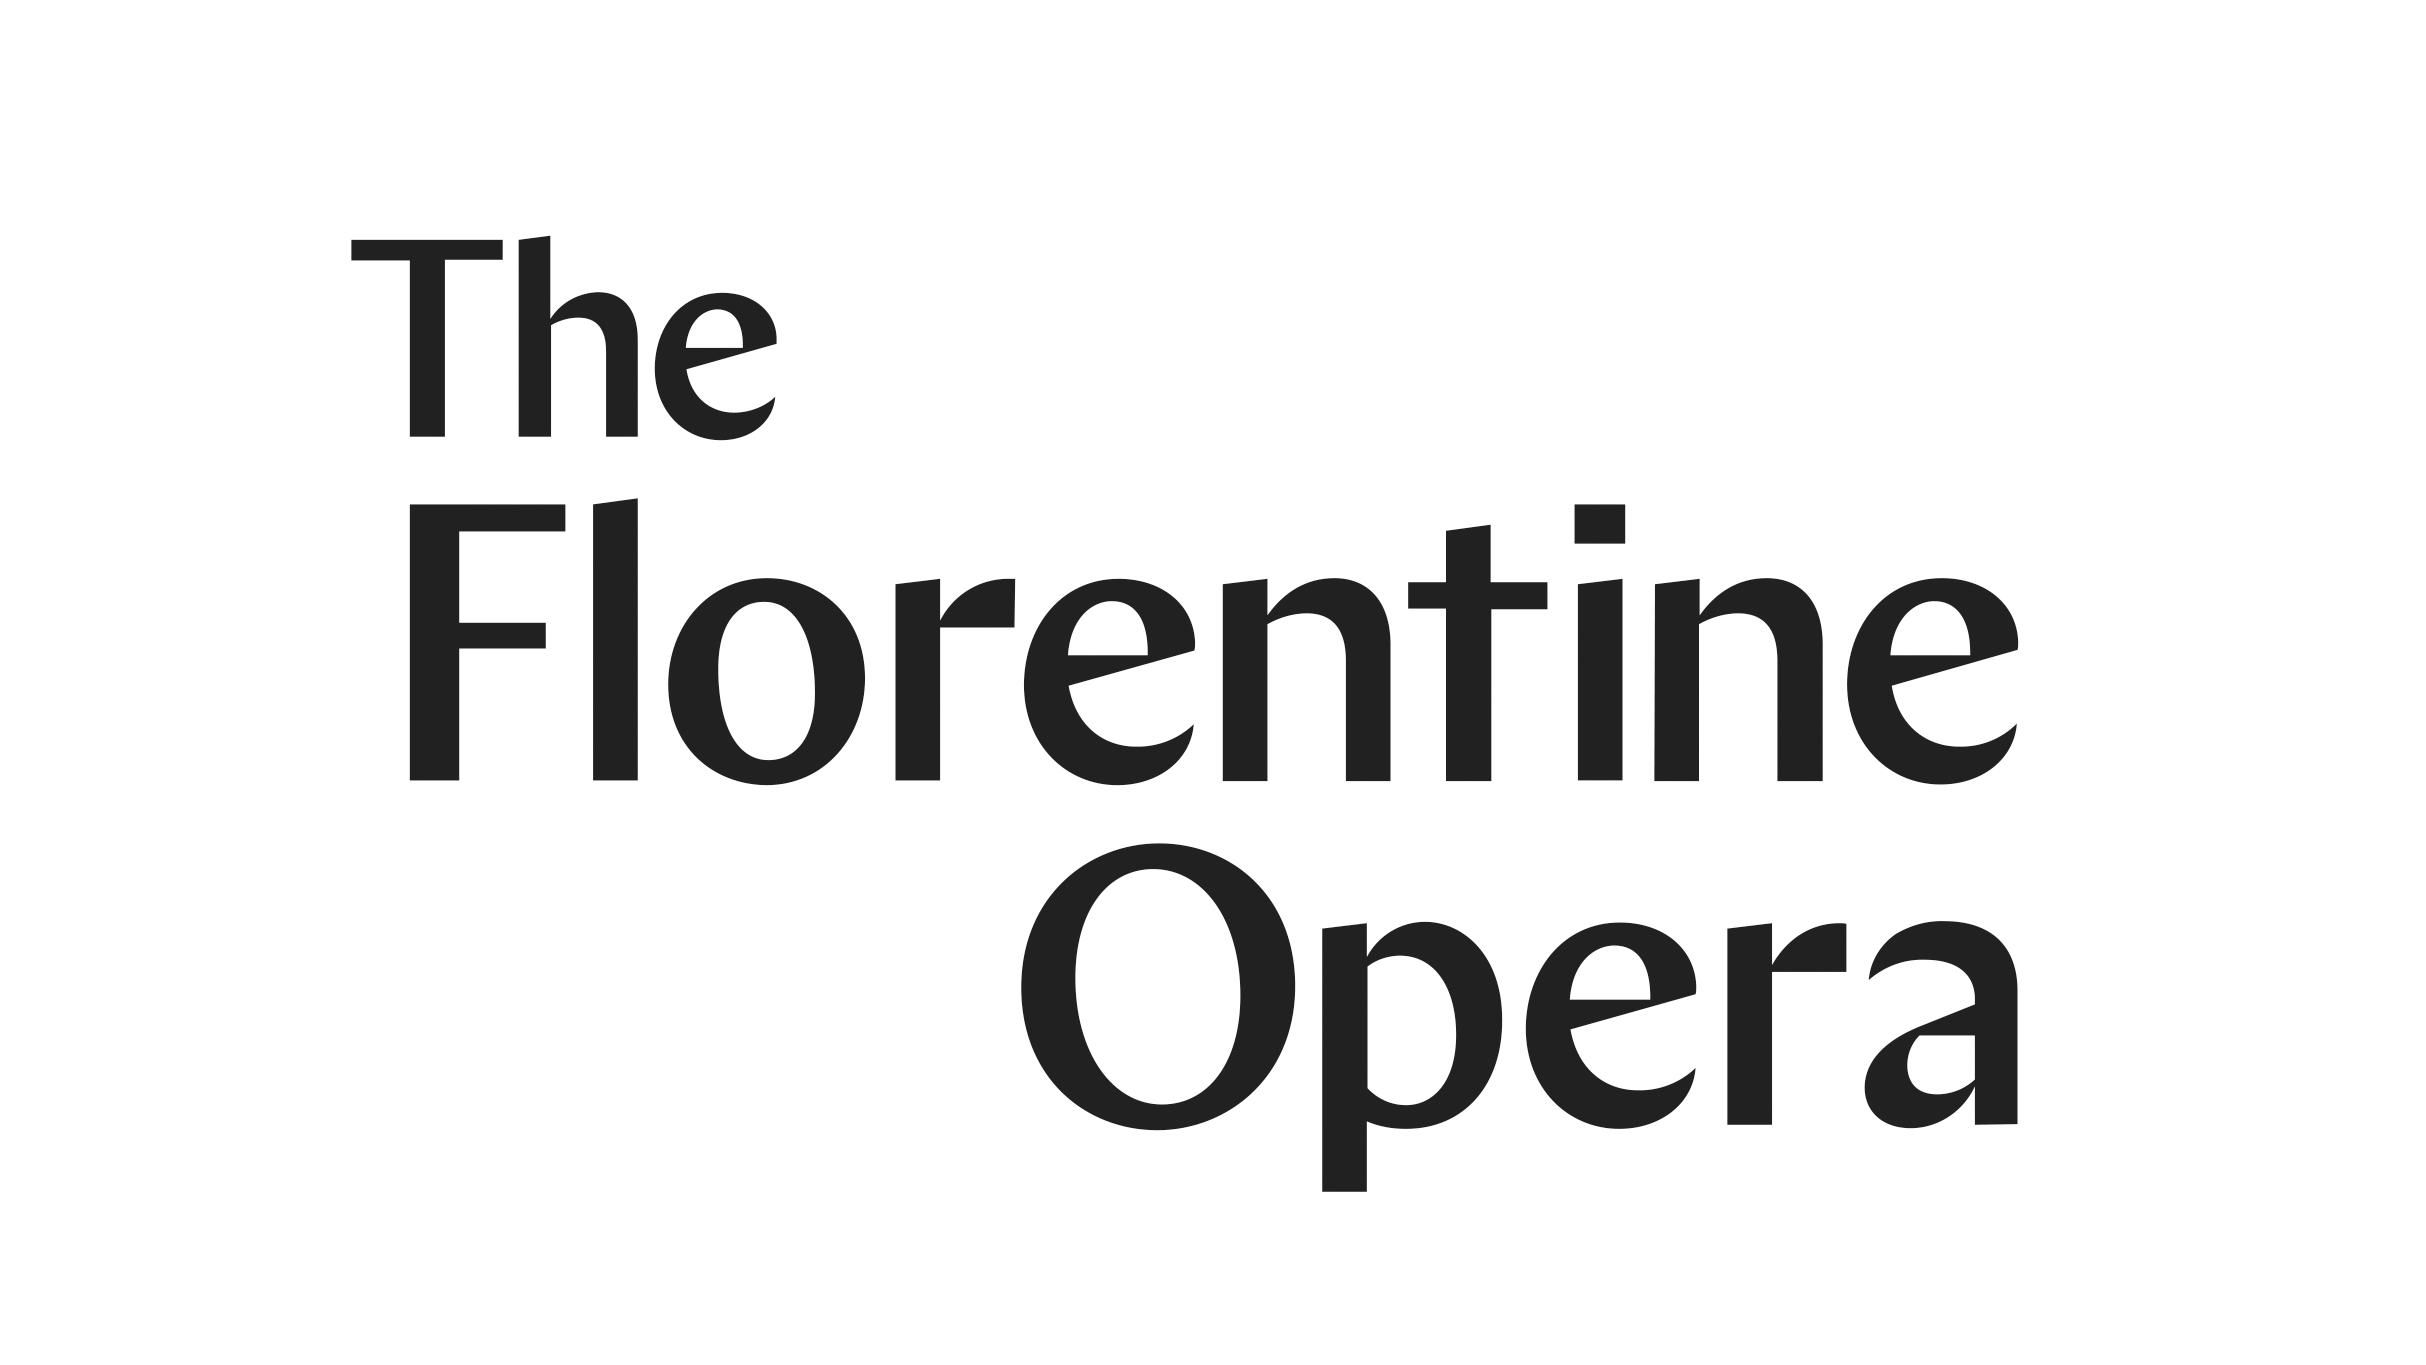 Florentine Opera